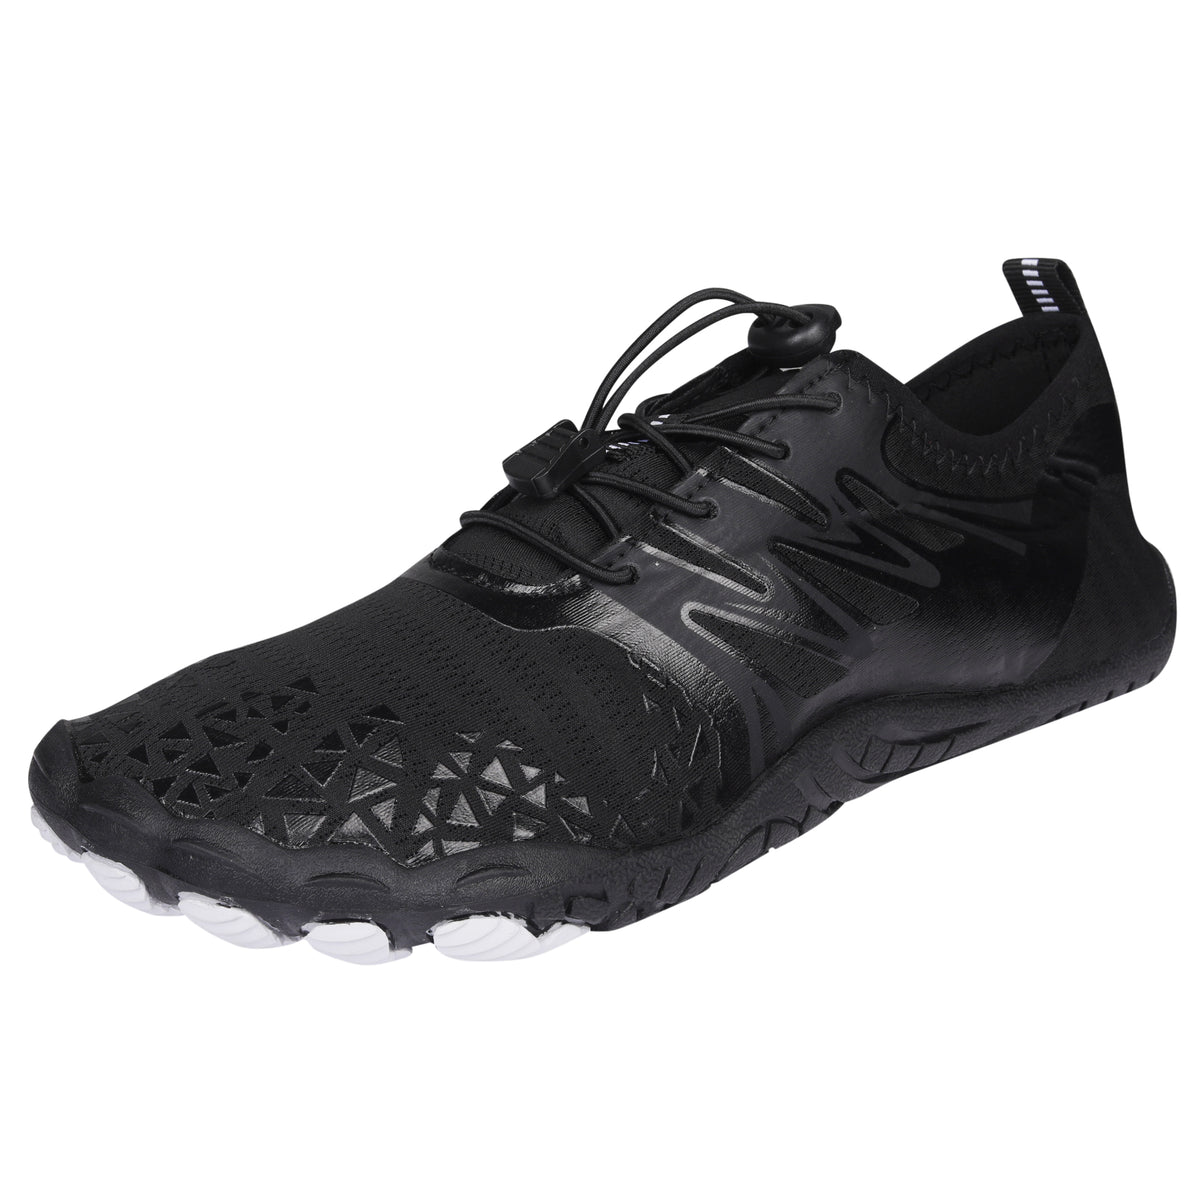 ANDUNE Men’s Barefoot & Minimalist Cross Training Shoes – Ultra Light Carbon Blaze